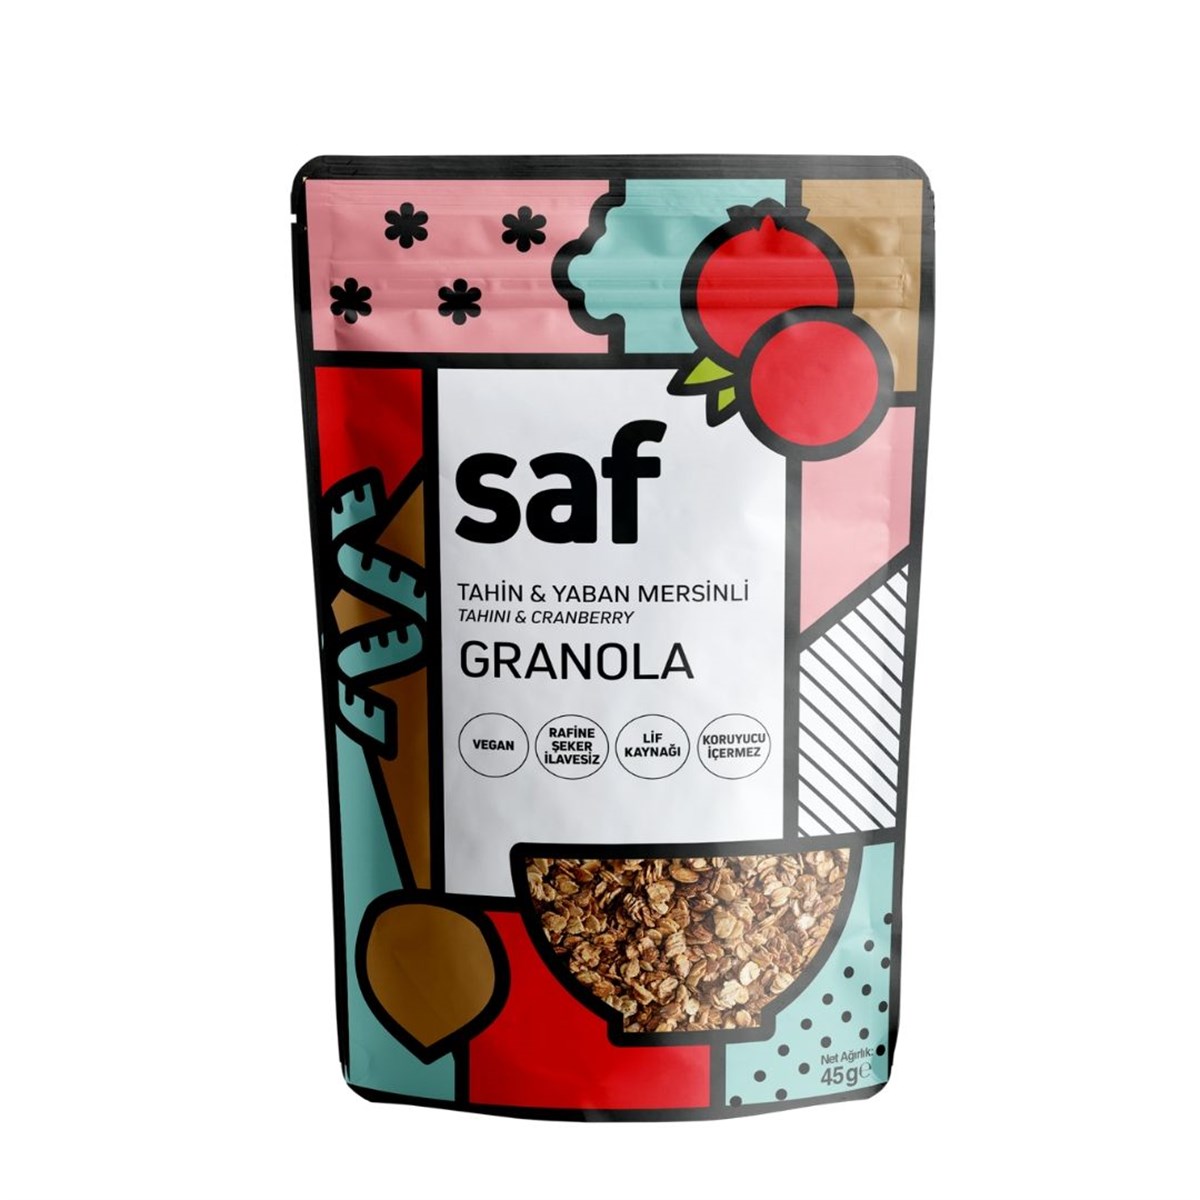 Saf - Tahin & Yaban Mersinli Granola 45 g